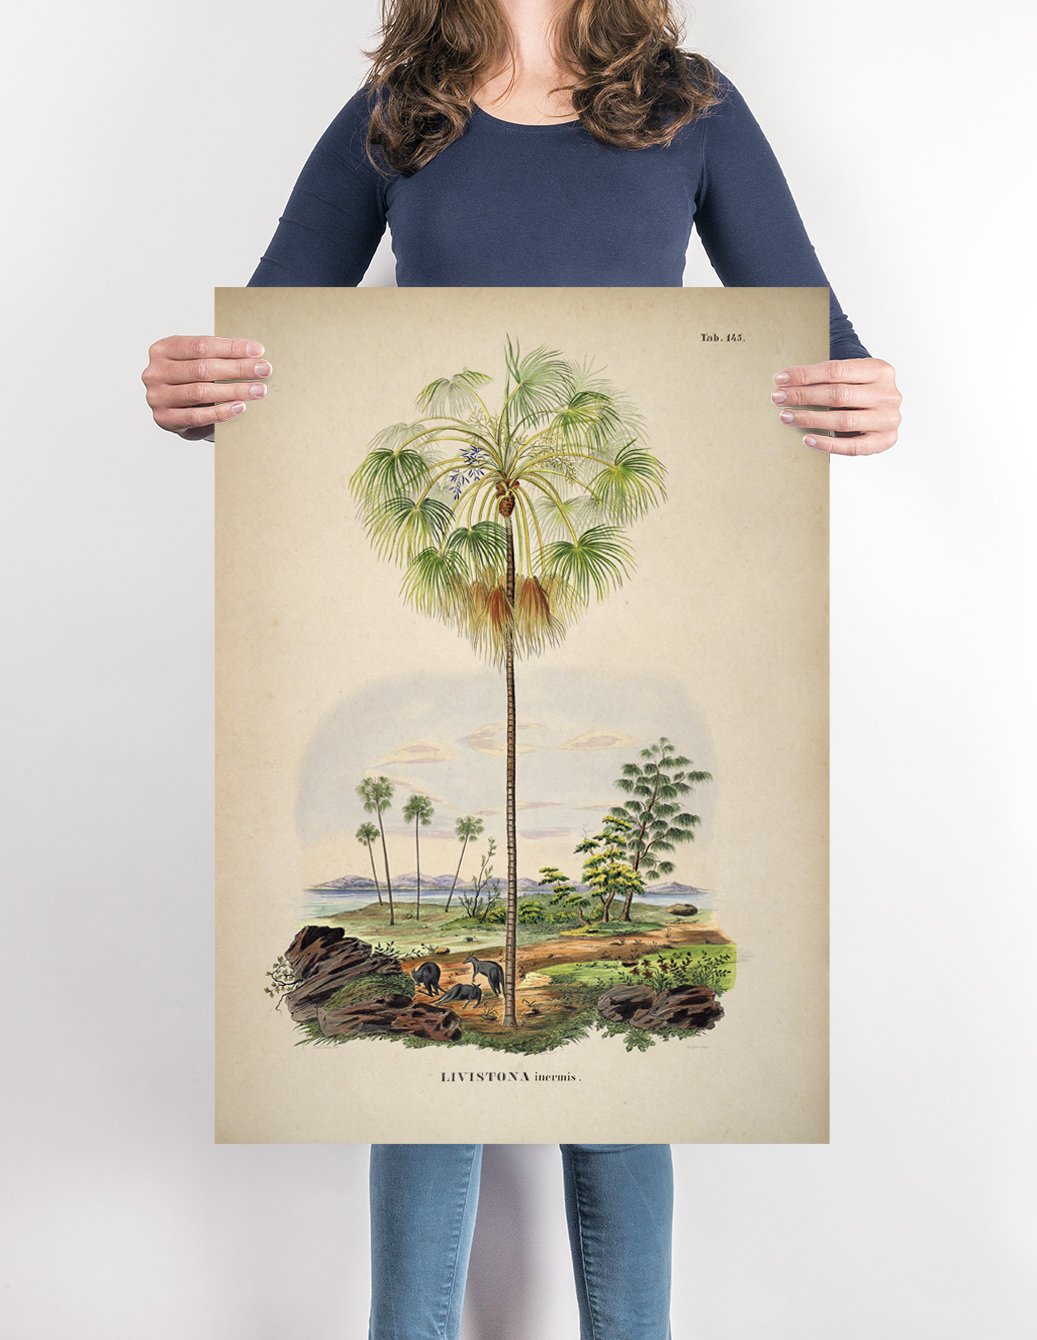 Livistona Inermis Tree Vintage Poster